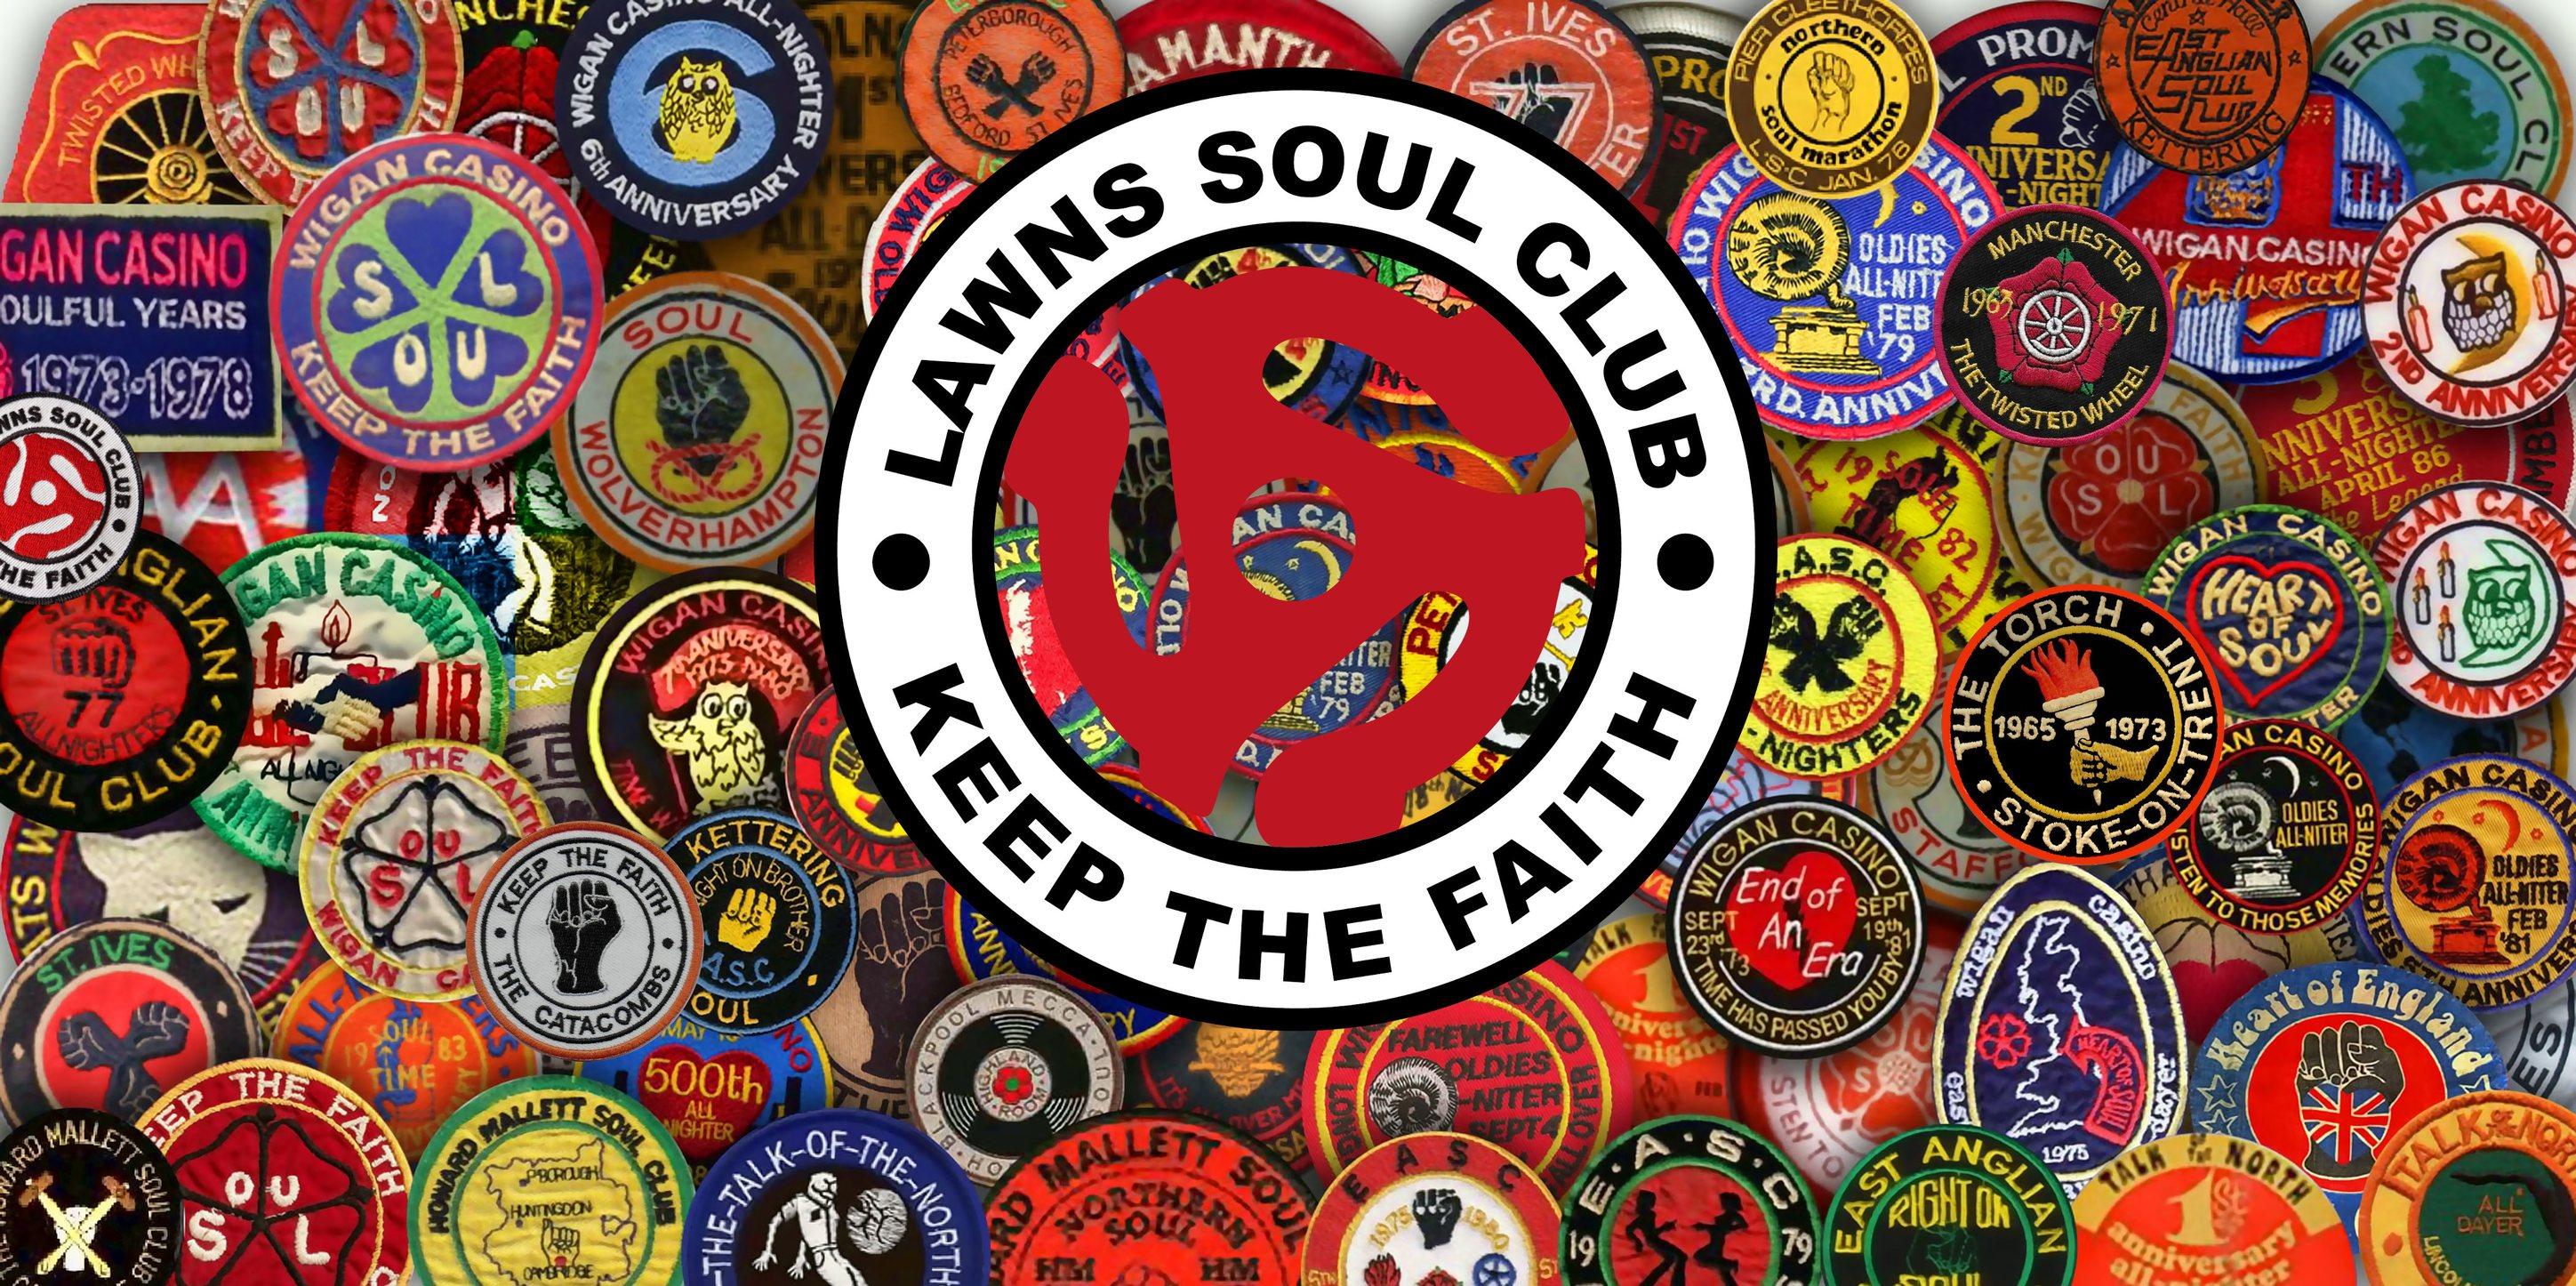 Lawns Soul Club